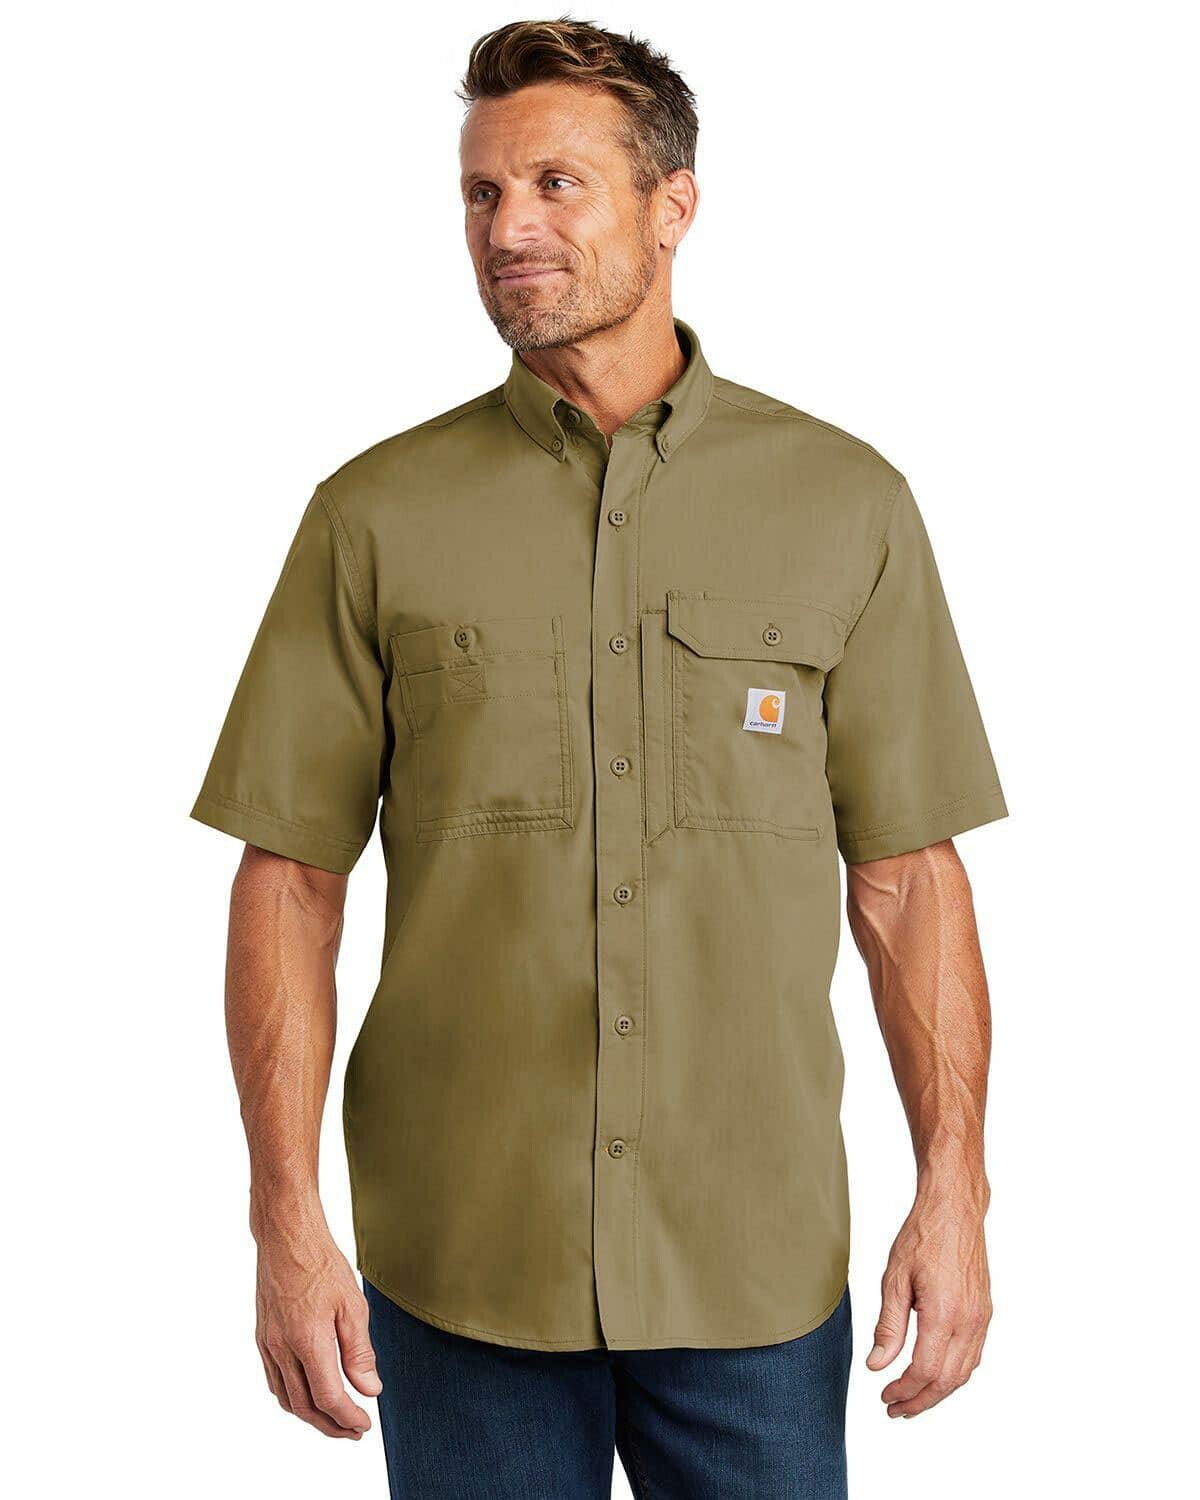 Hanes Dark Blue Fishing Graphic Short Sleeve shirt Mens Size Large - beyond  exchange